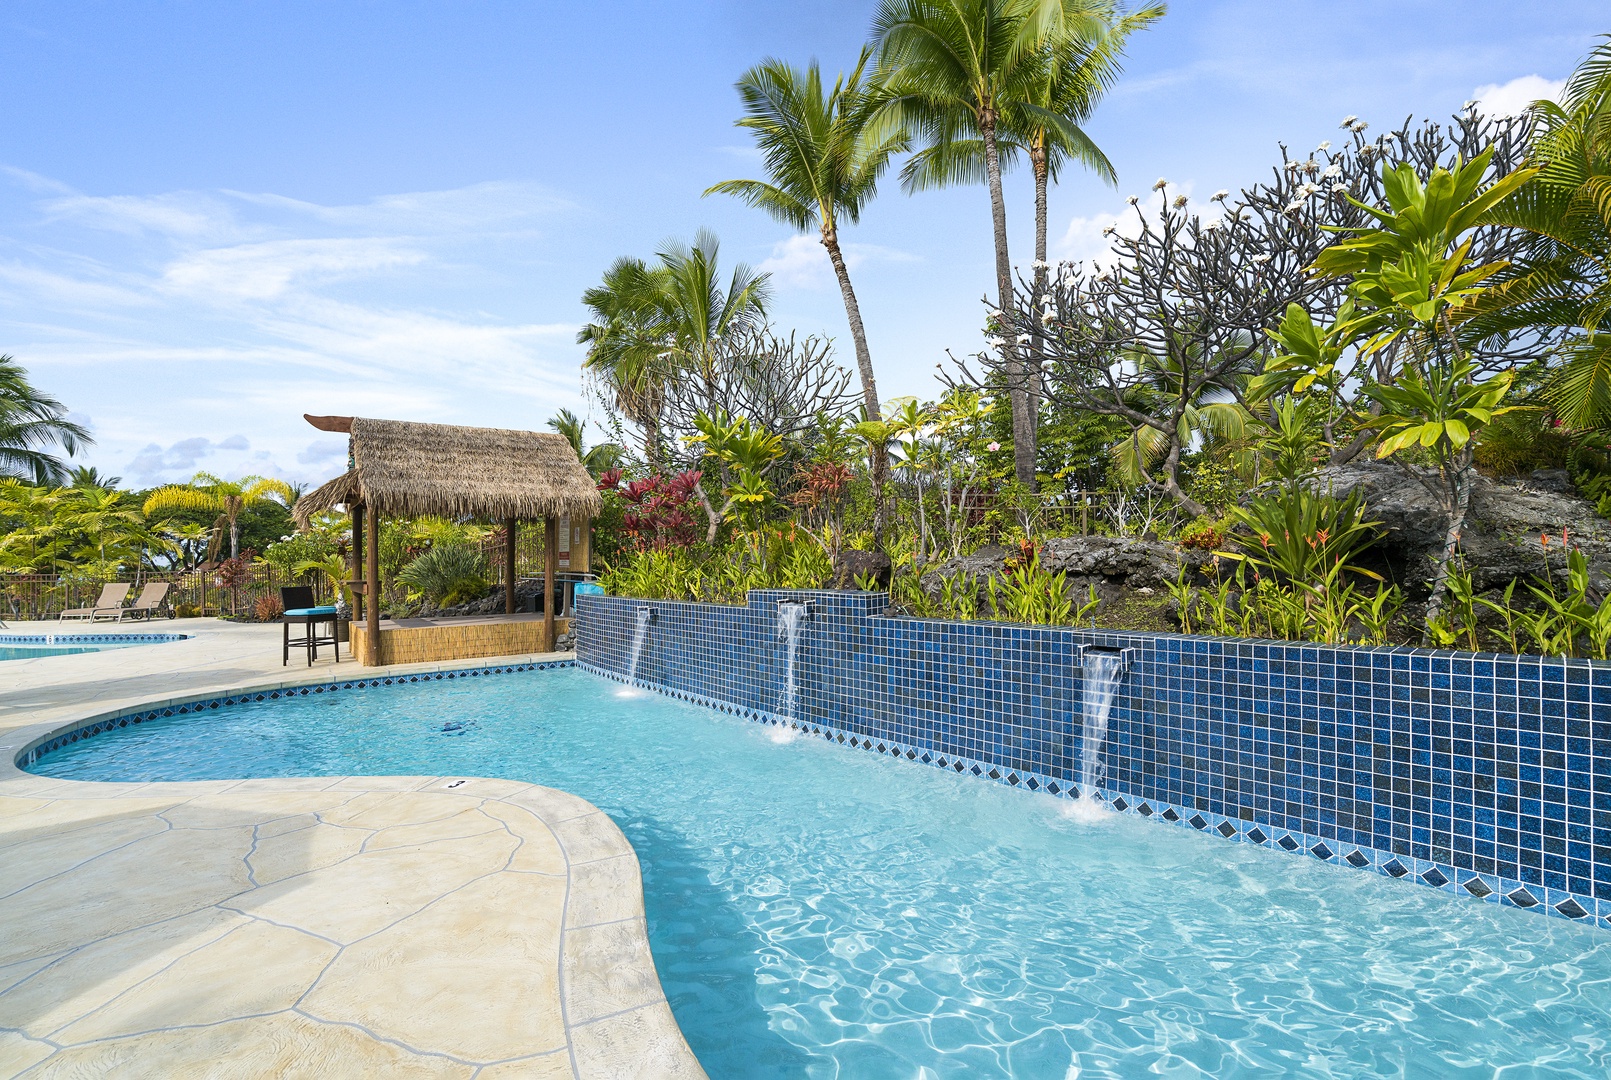 Kailua Kona Vacation Rentals, Keauhou Resort 104 - Cool off at the community pool